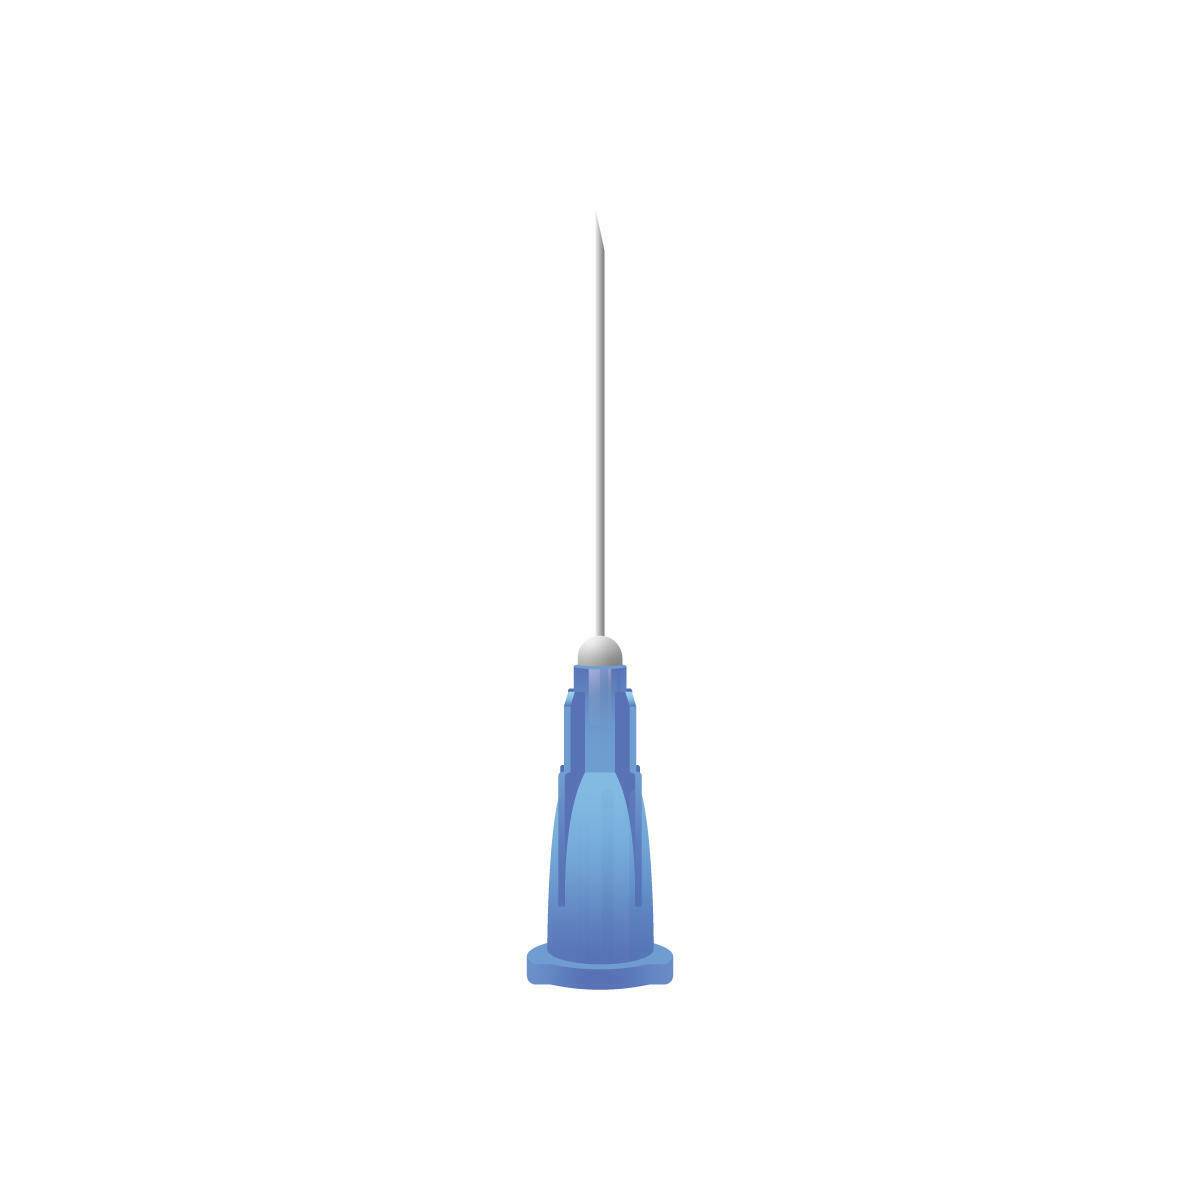 23g Blue 1 inch Terumo Needles AN2325R1 UKMEDI.CO.UK